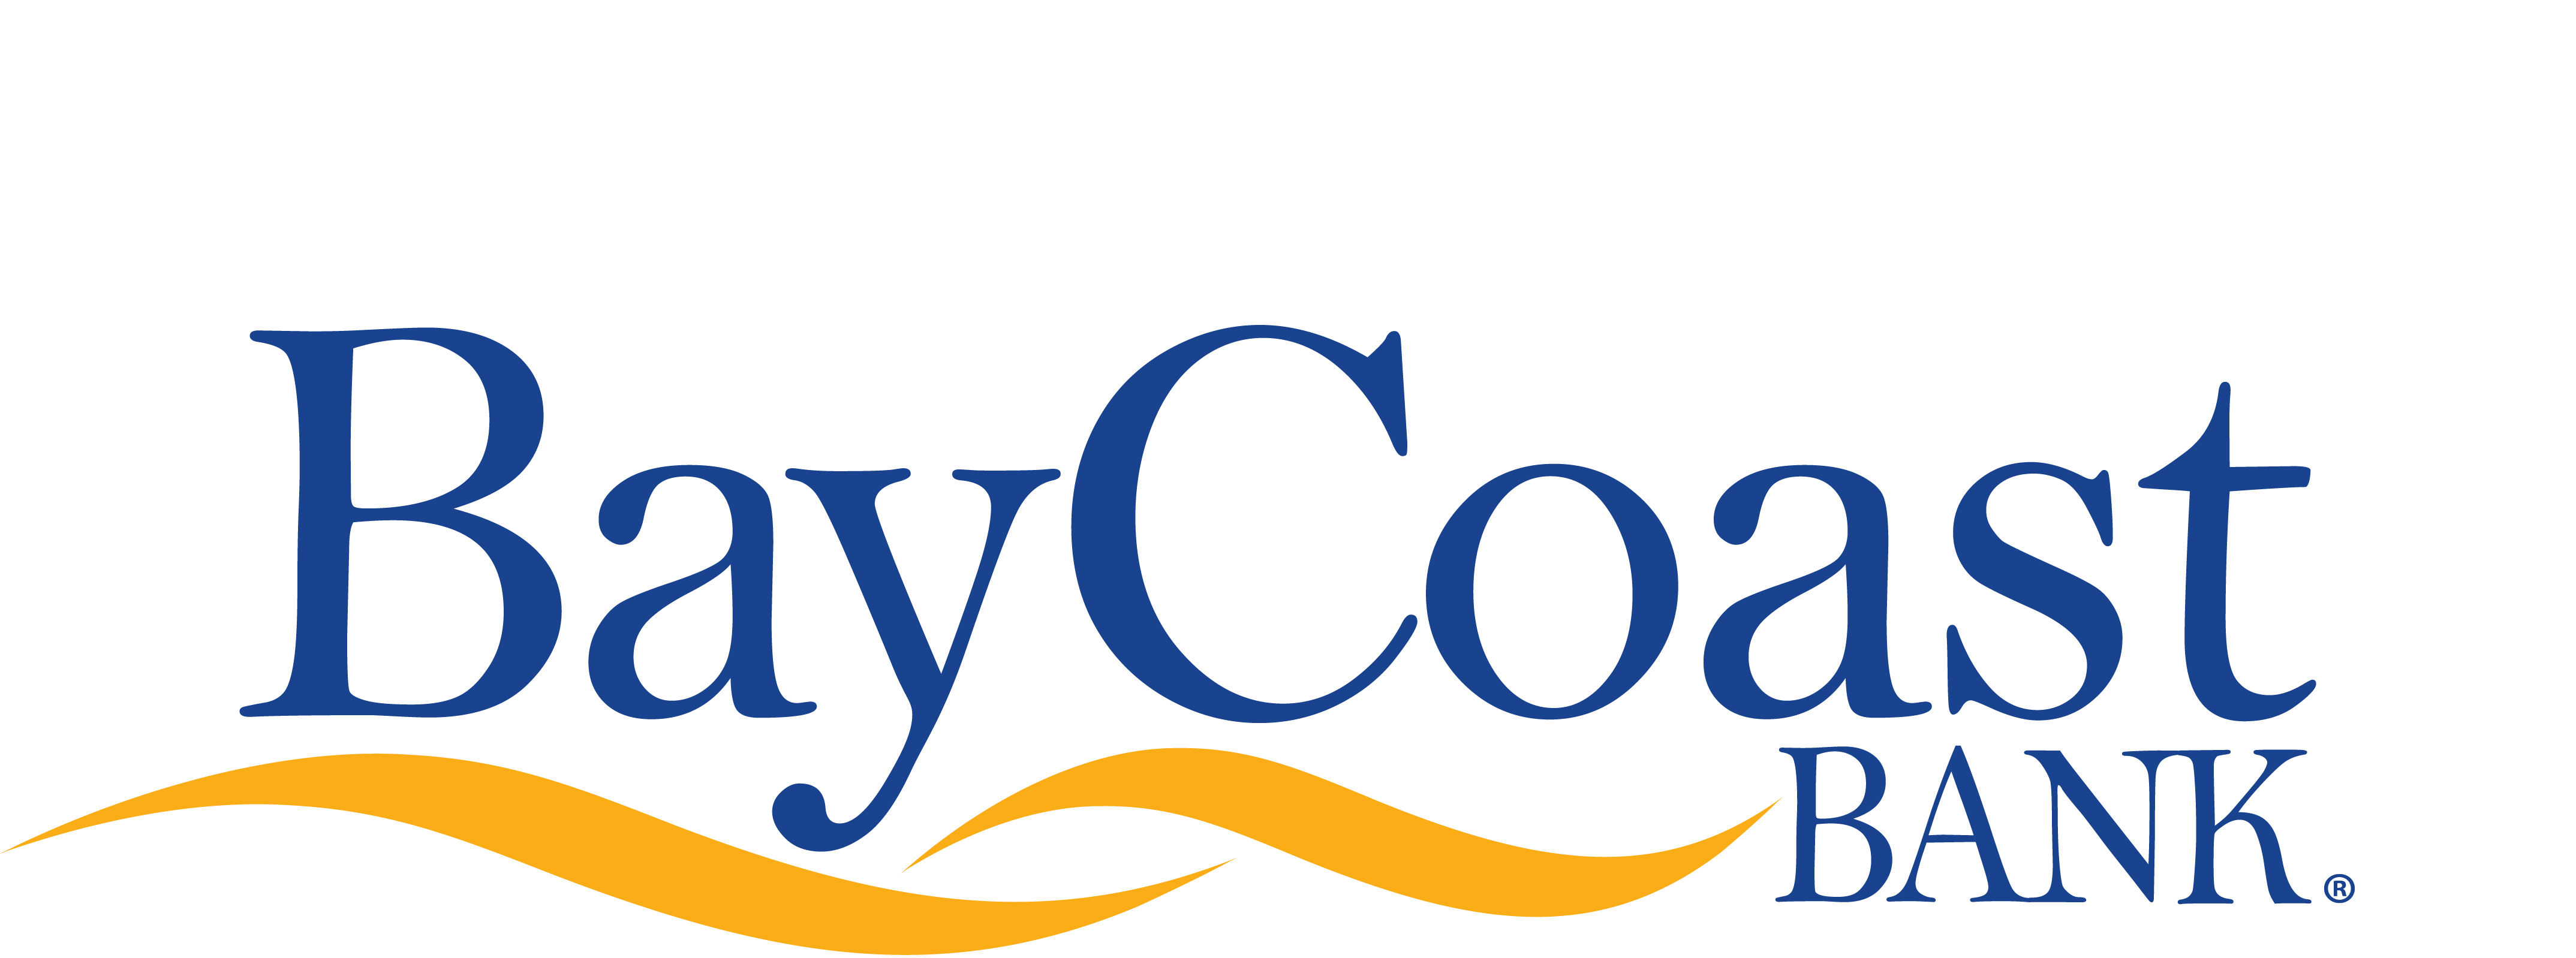 Bay Coast Bank logo